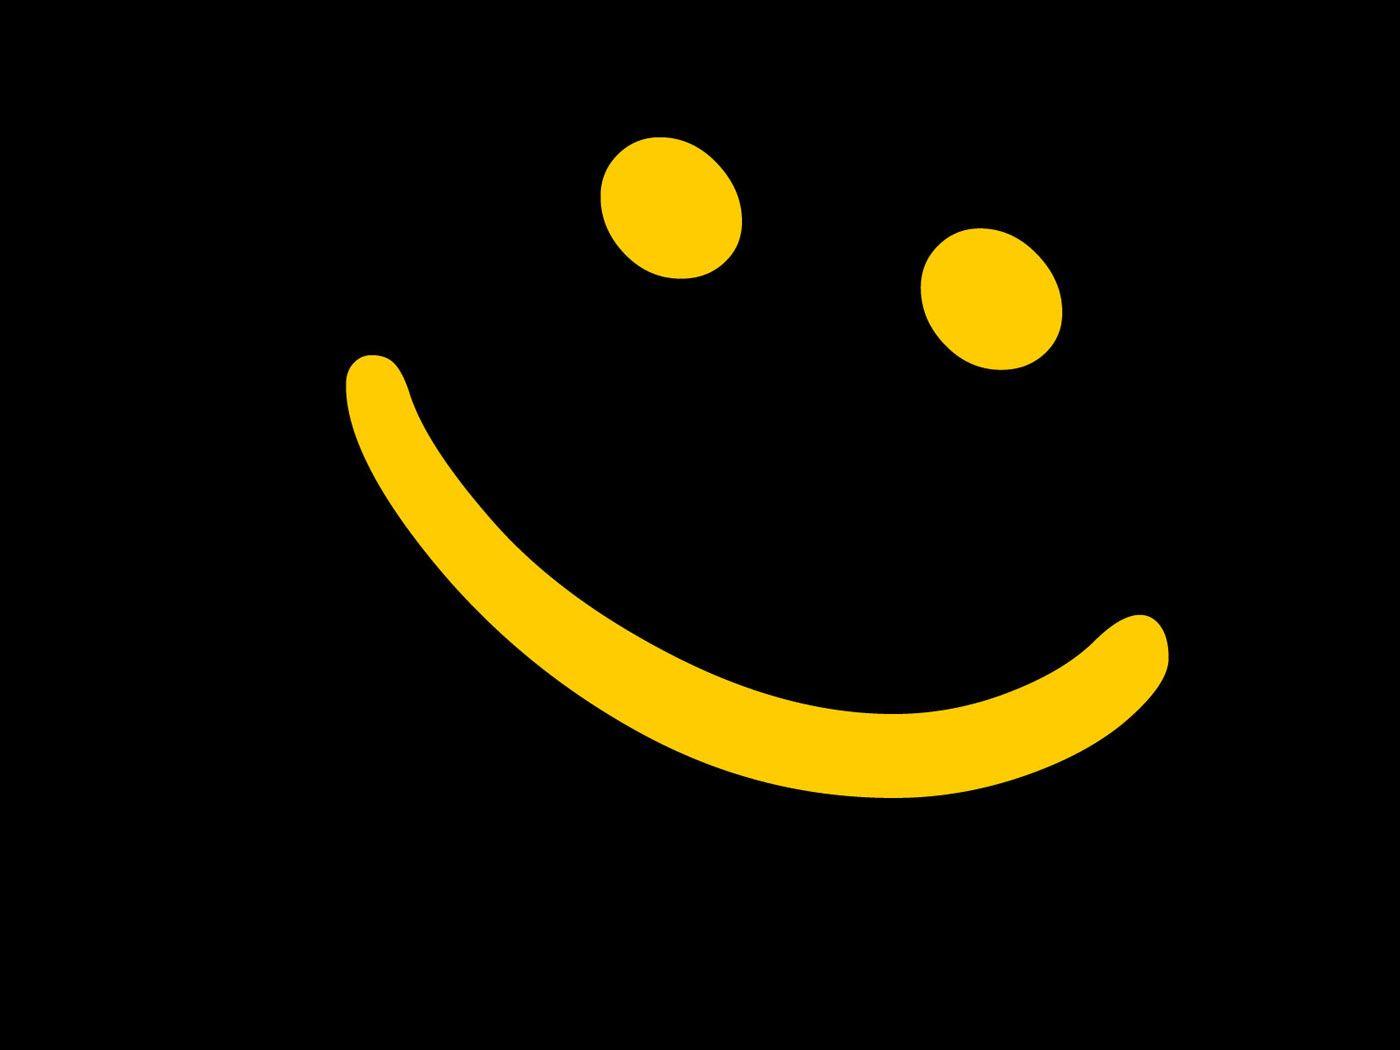 Wallpaper Yellow and Black Smiley Emoji, Background - Download Free Image